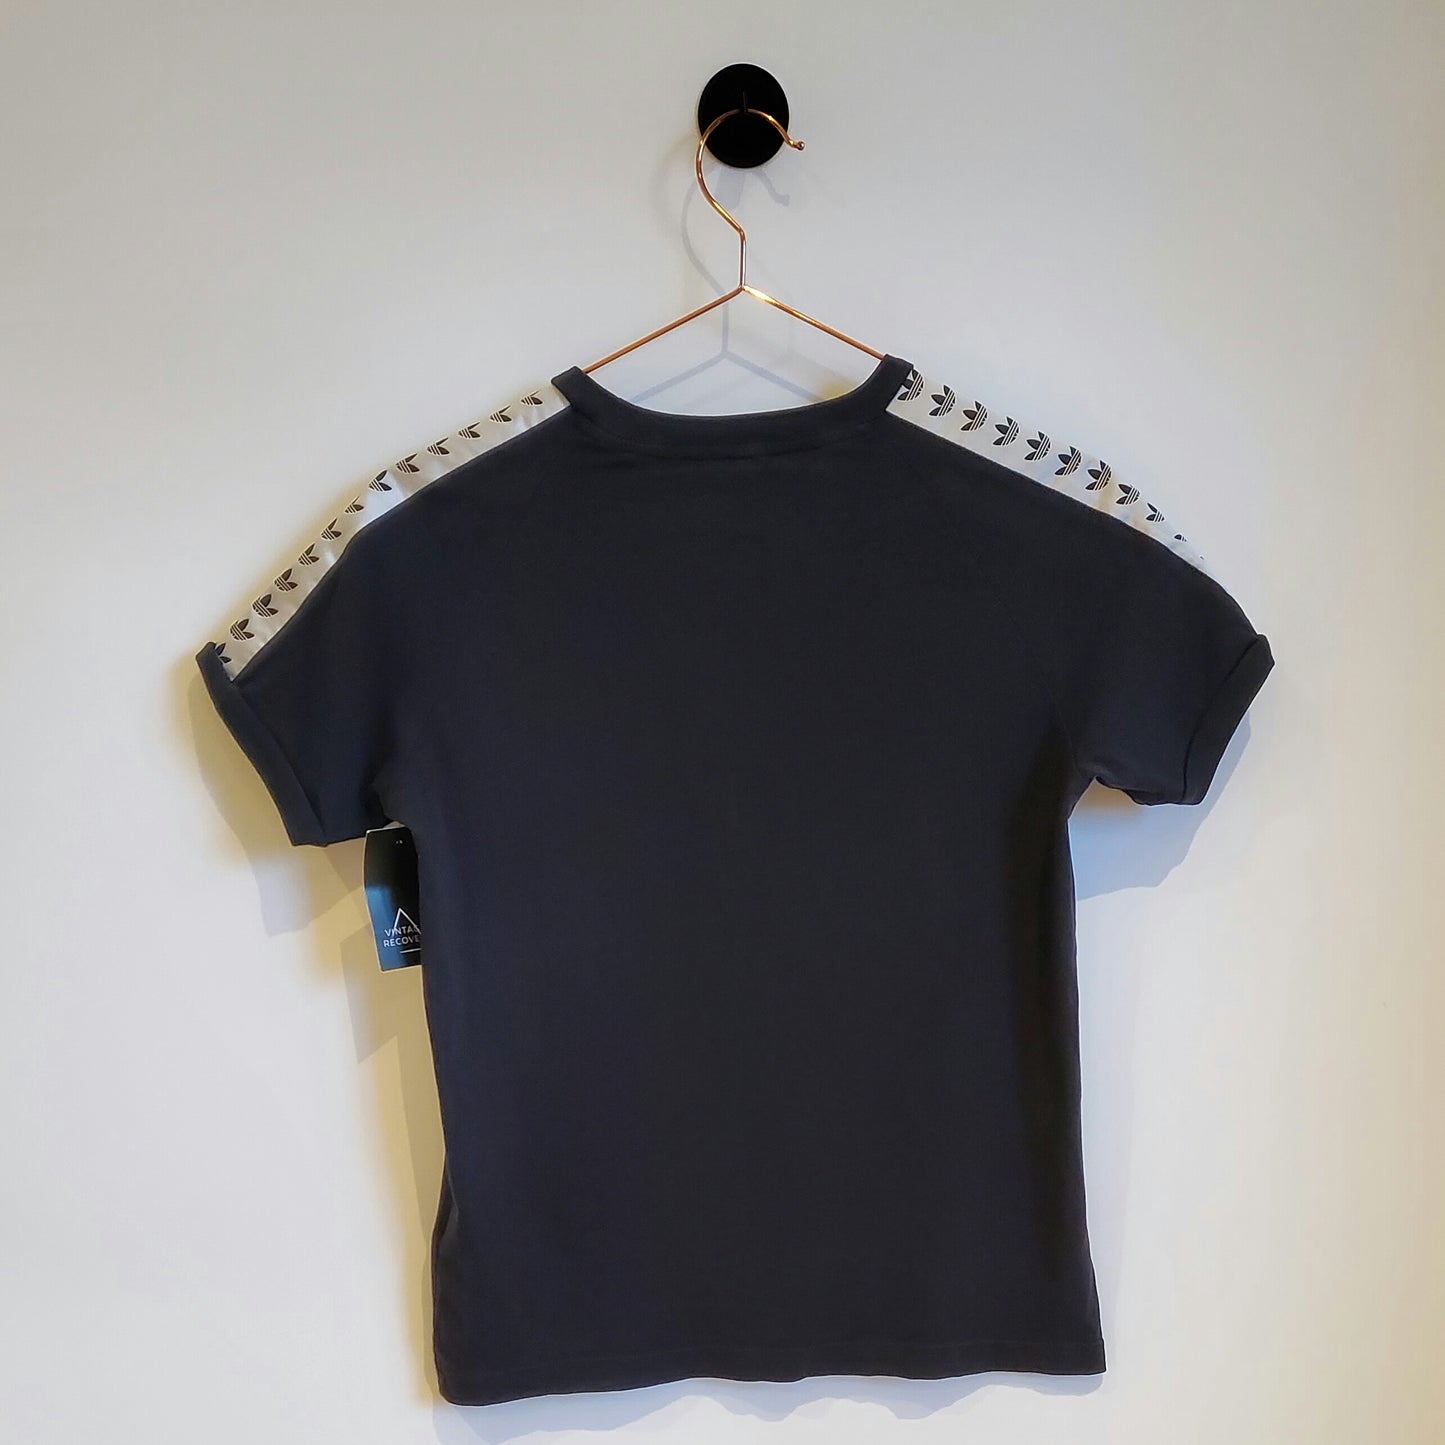 Adidas Tape Arm T-shirt